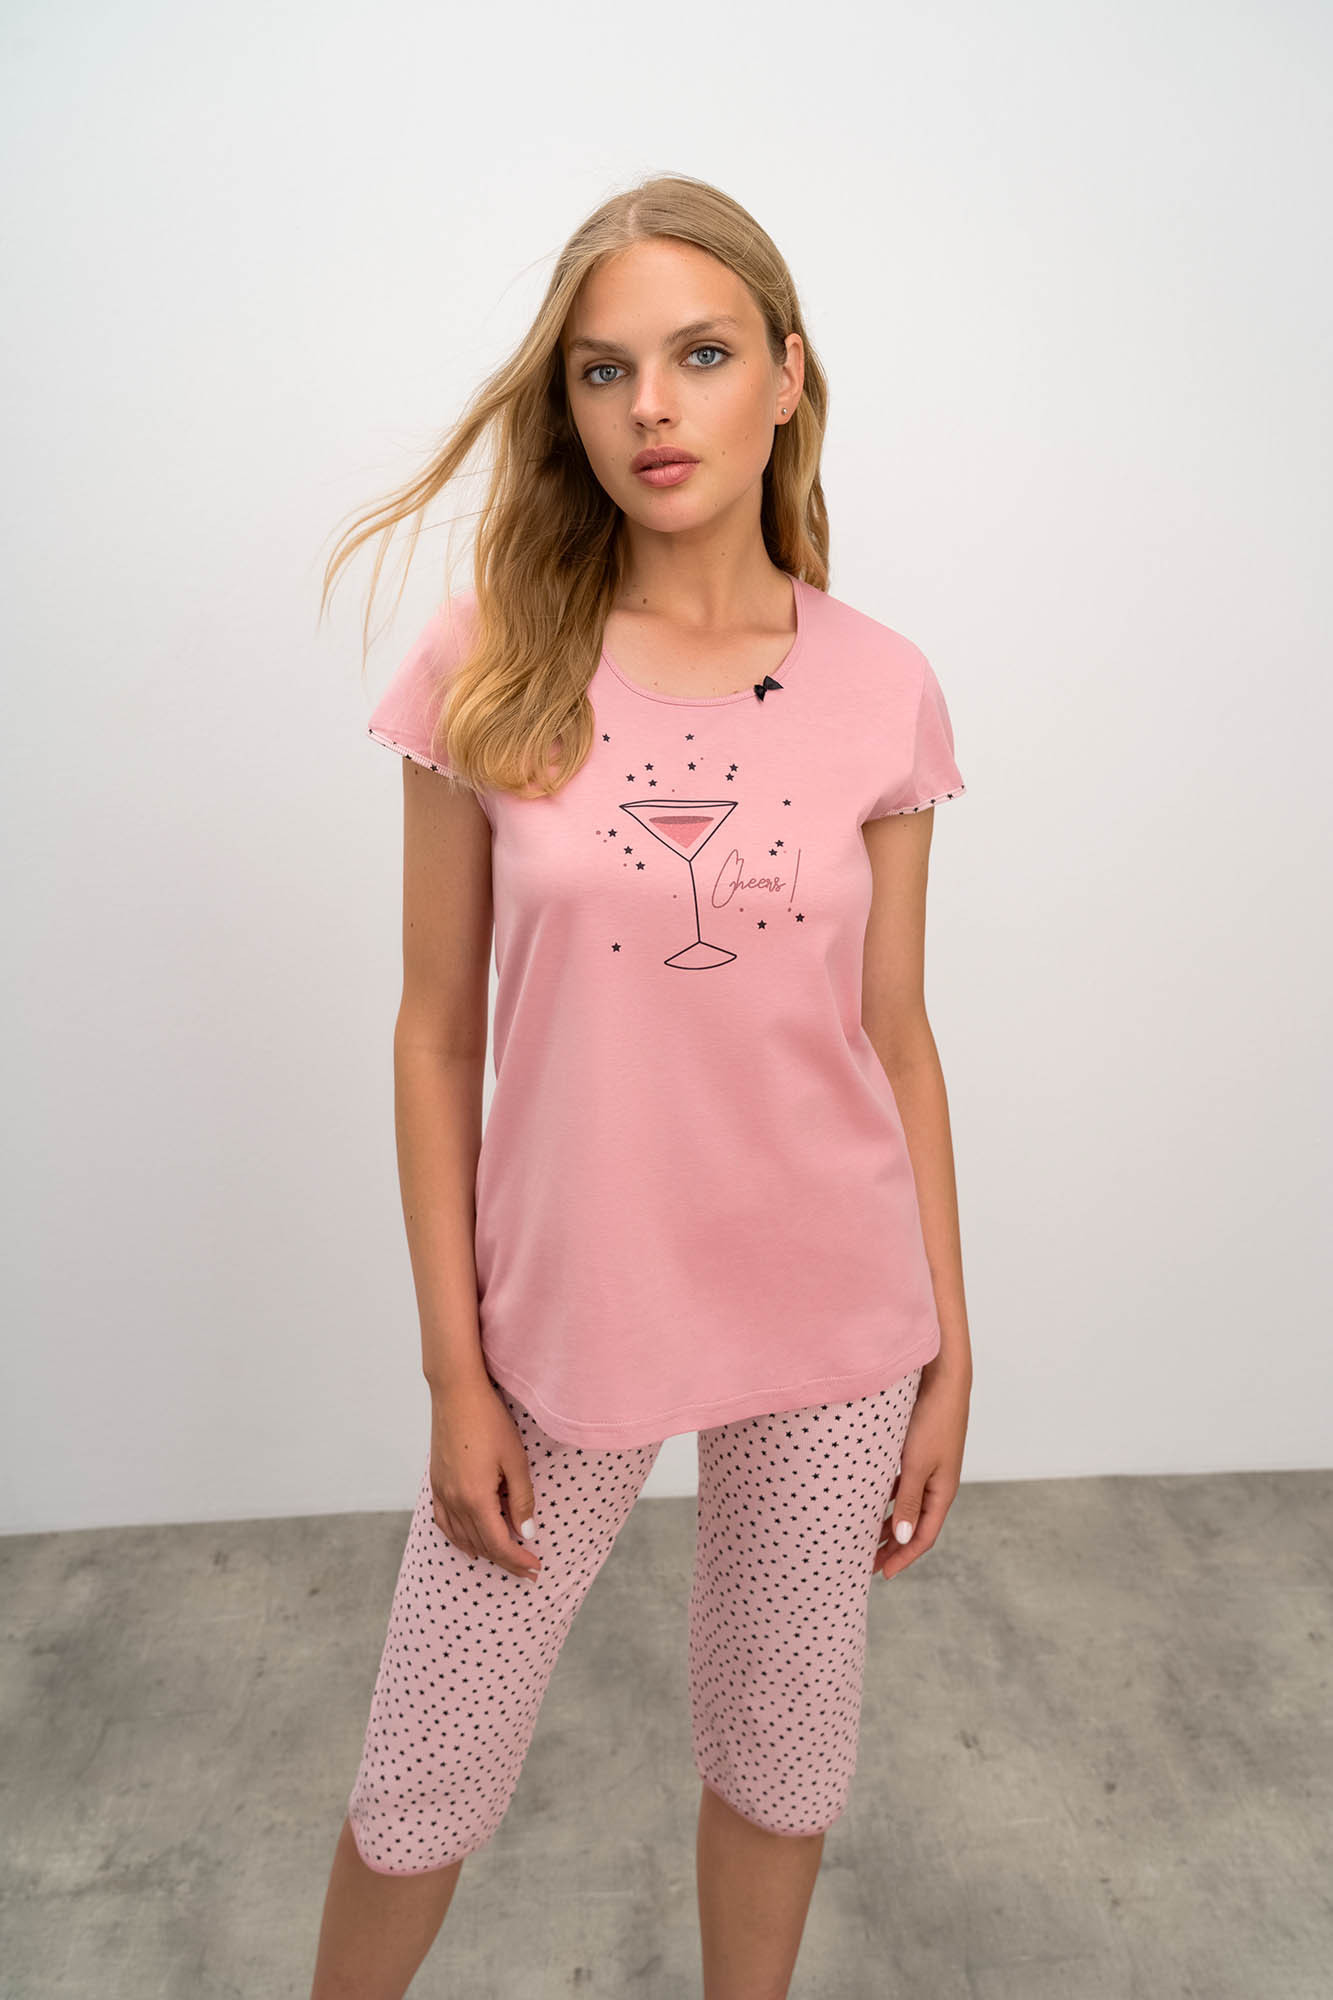 Vamp - Dvoudílné dámské pyžamo 16295 - Vamp pink gray S